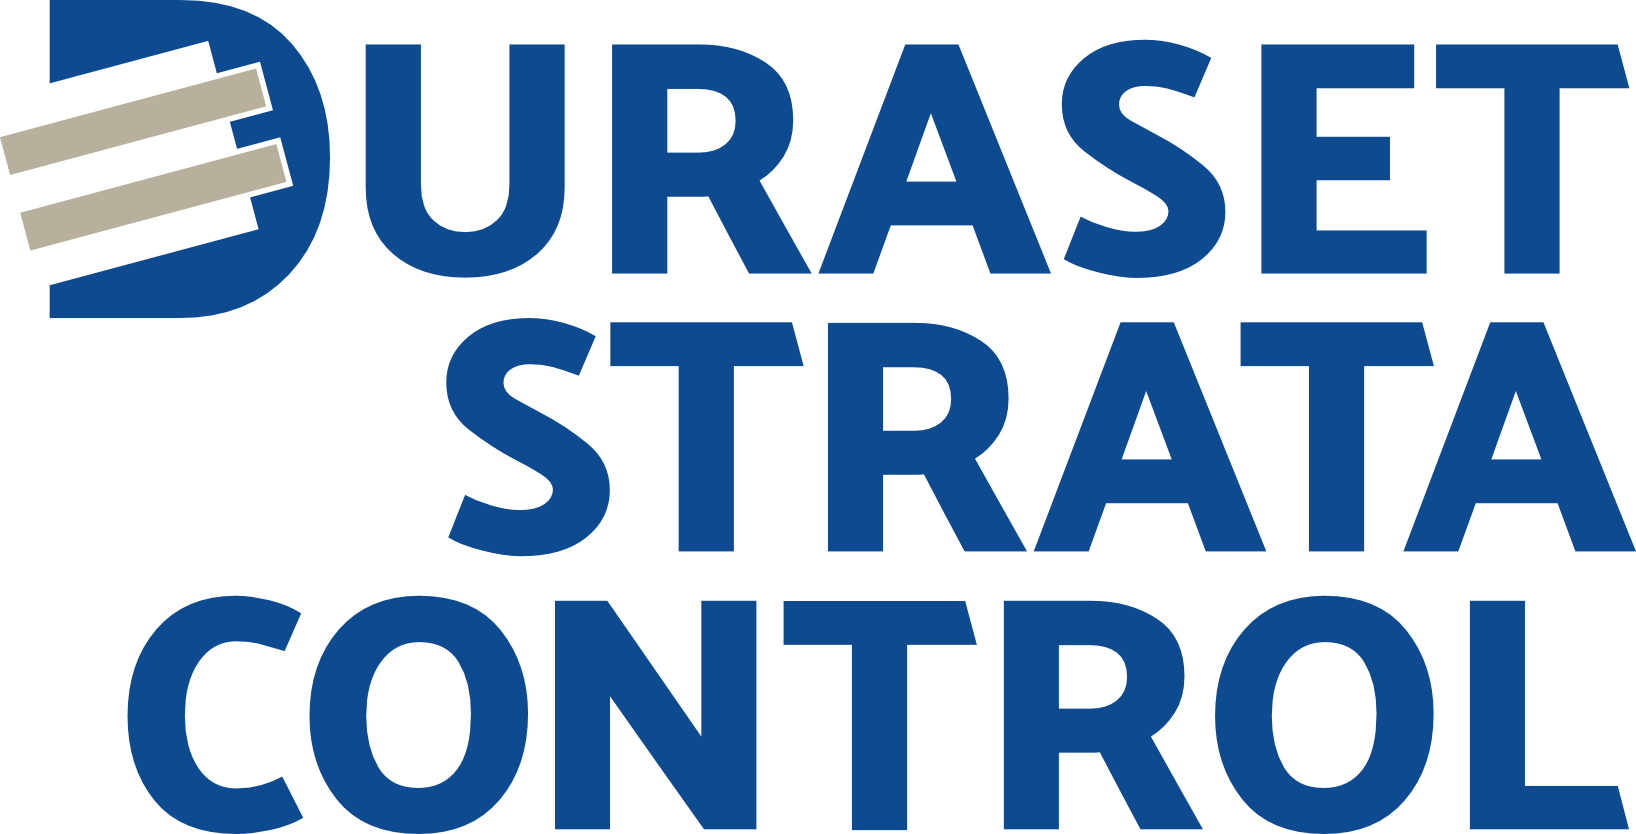 Duraset Strata Control (Pty) Ltd logo